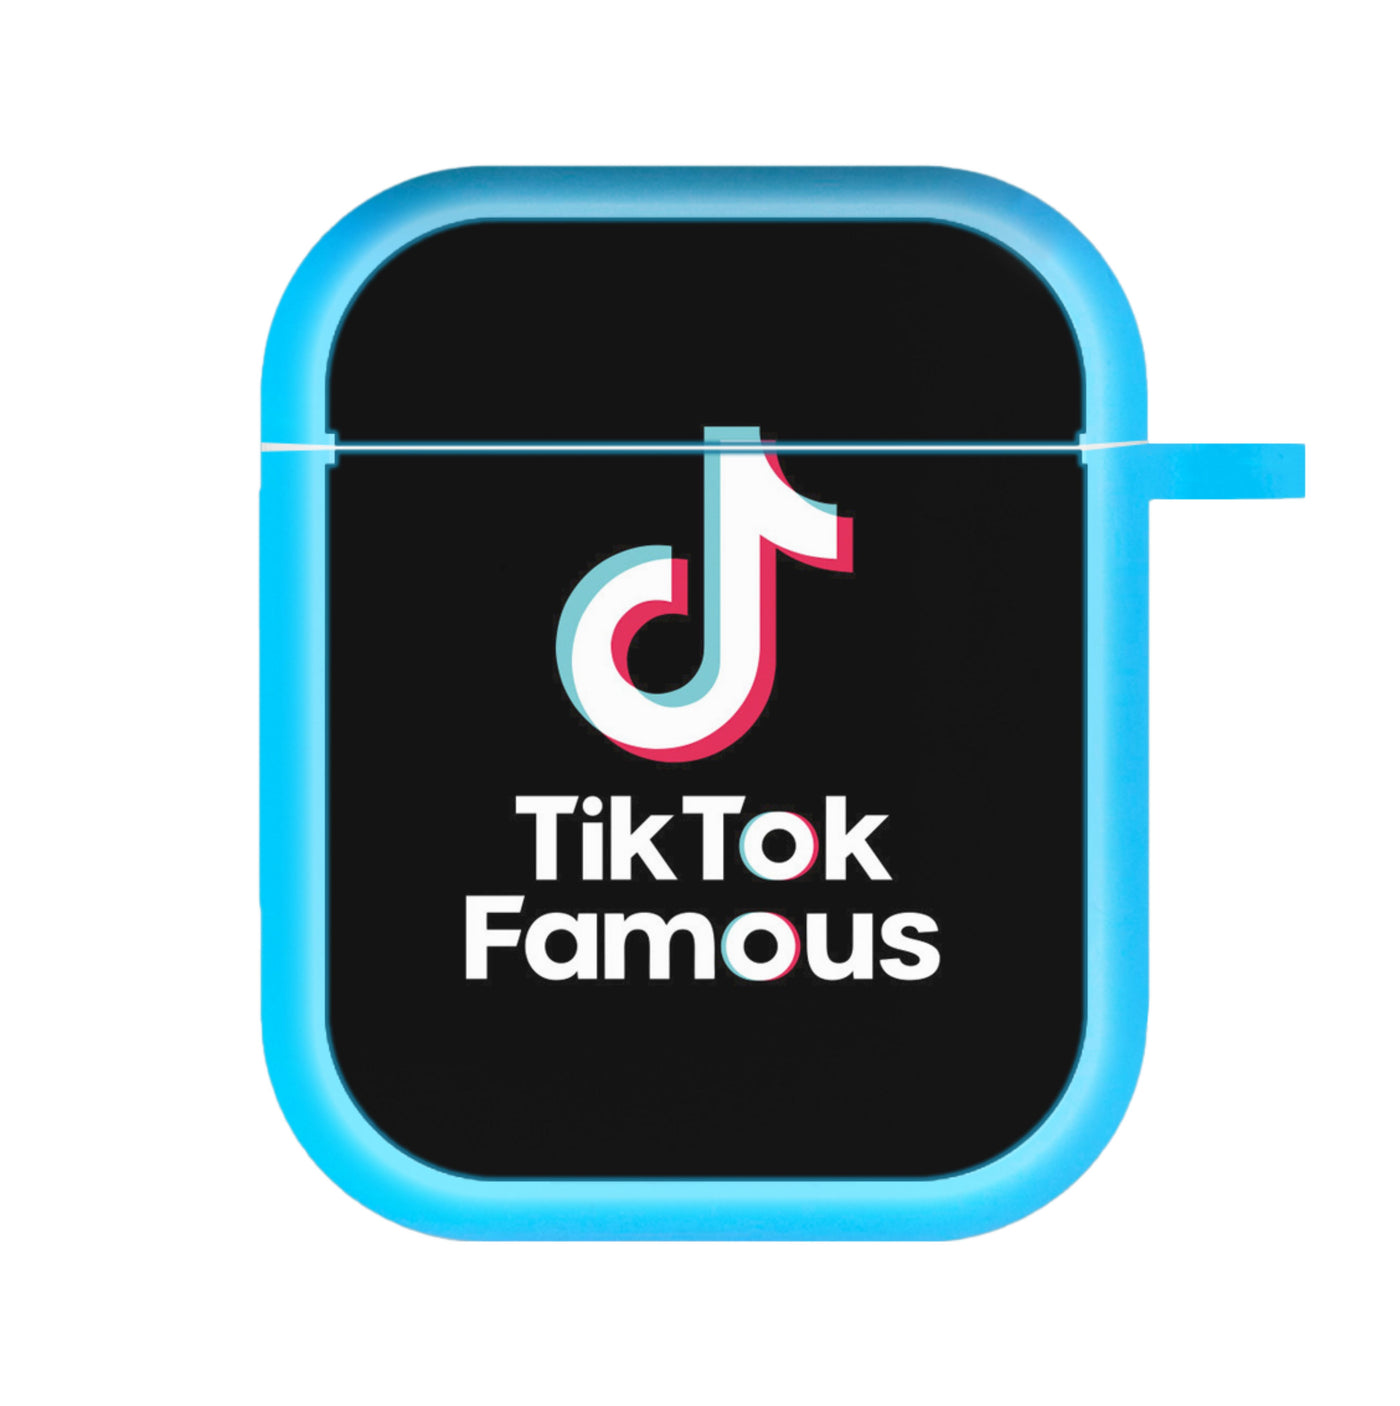 TikTok Famous AirPods Case